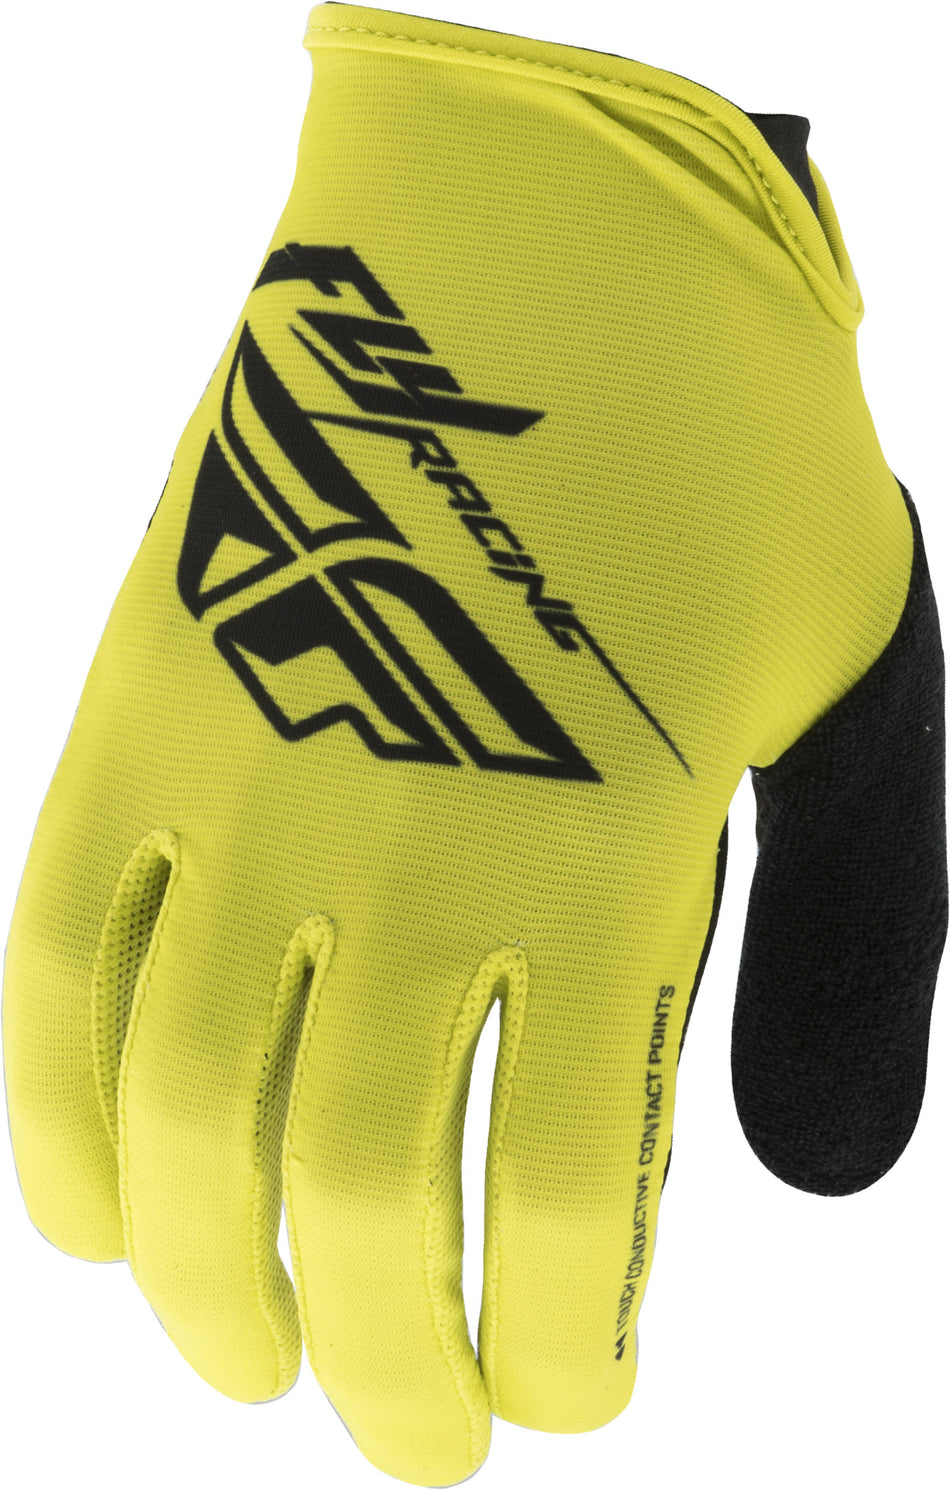 FLY RACING Media Gloves Lime/Black Sz 13 350-09513